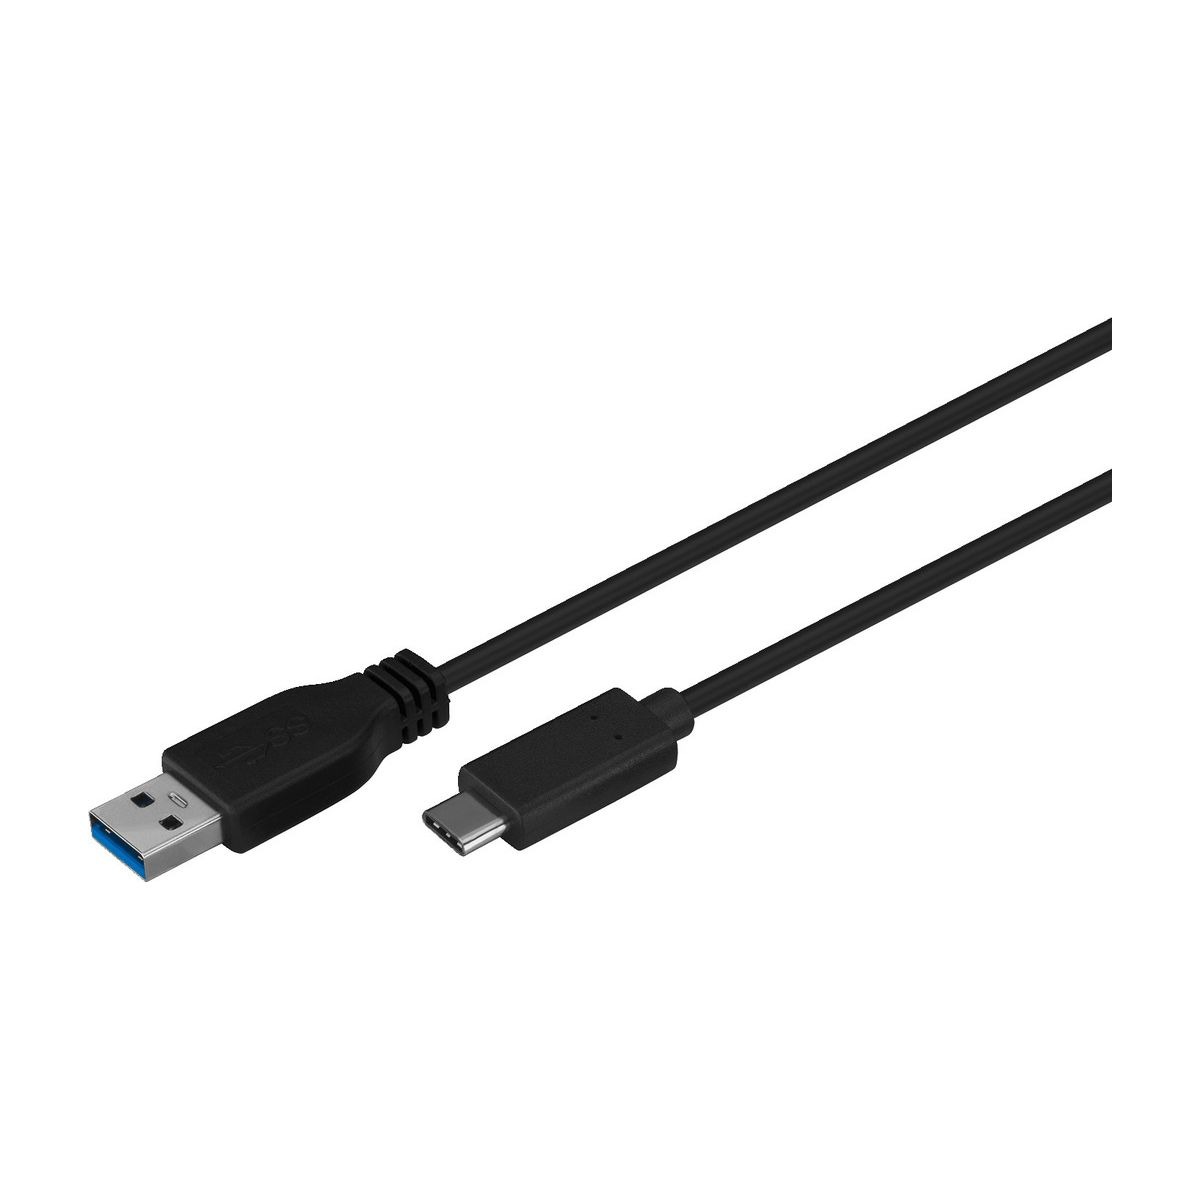 USB-312CA | USB adapter cable, 2 m-0